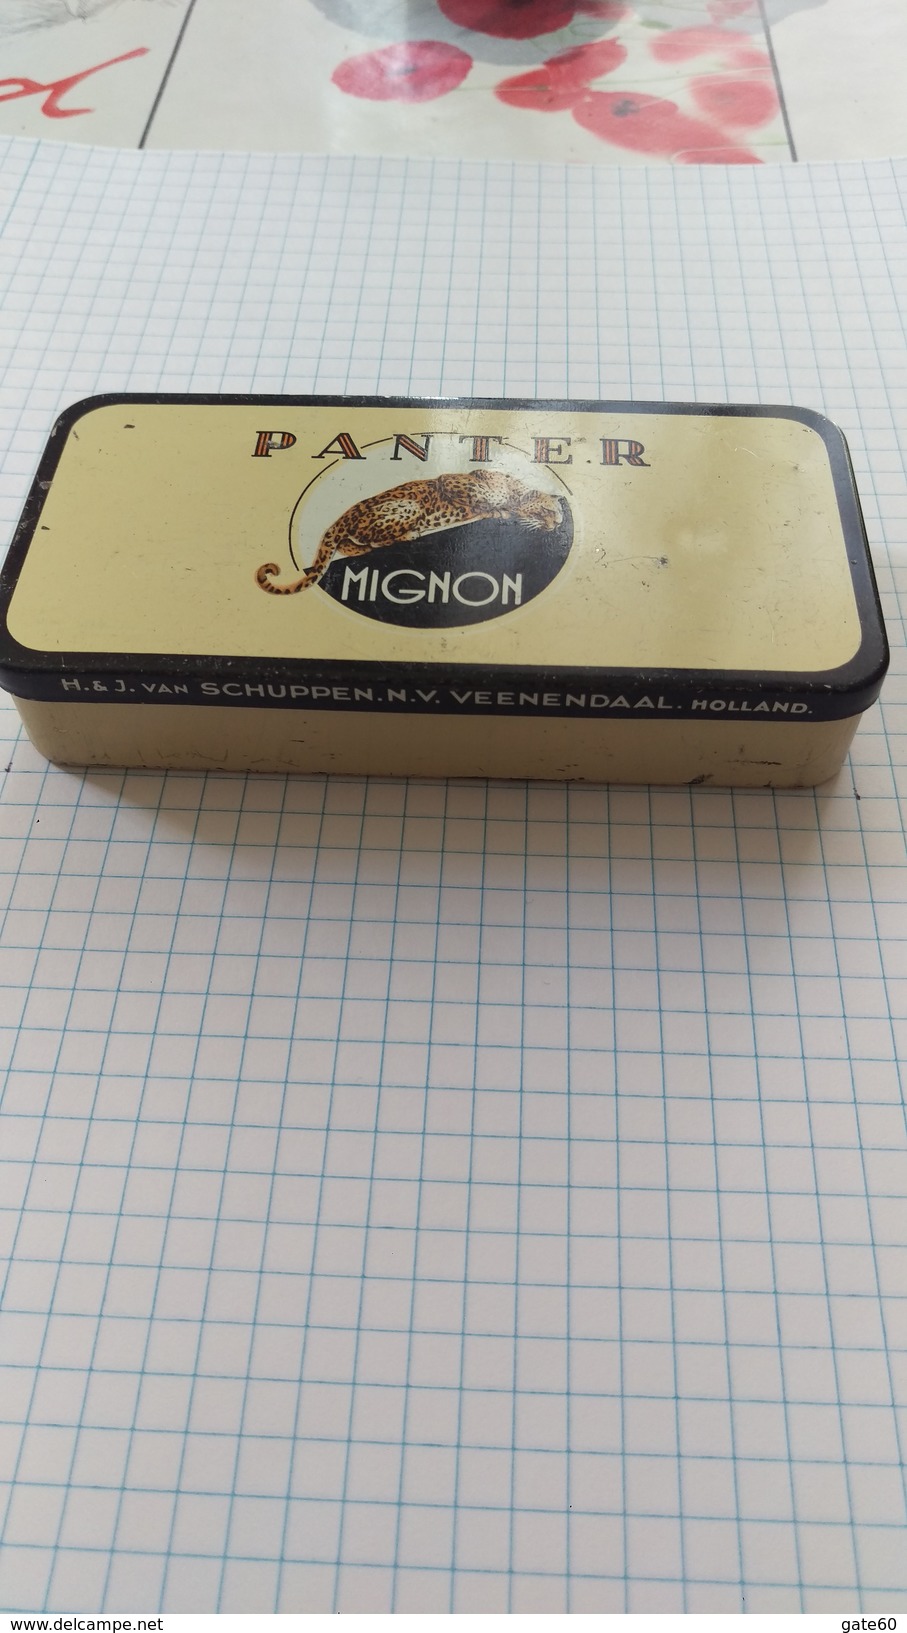 Panter Mignon Panter Sigarenfabrieken H. & J.Van Schuppen  Veenendaal - Holland - Boites à Tabac Vides